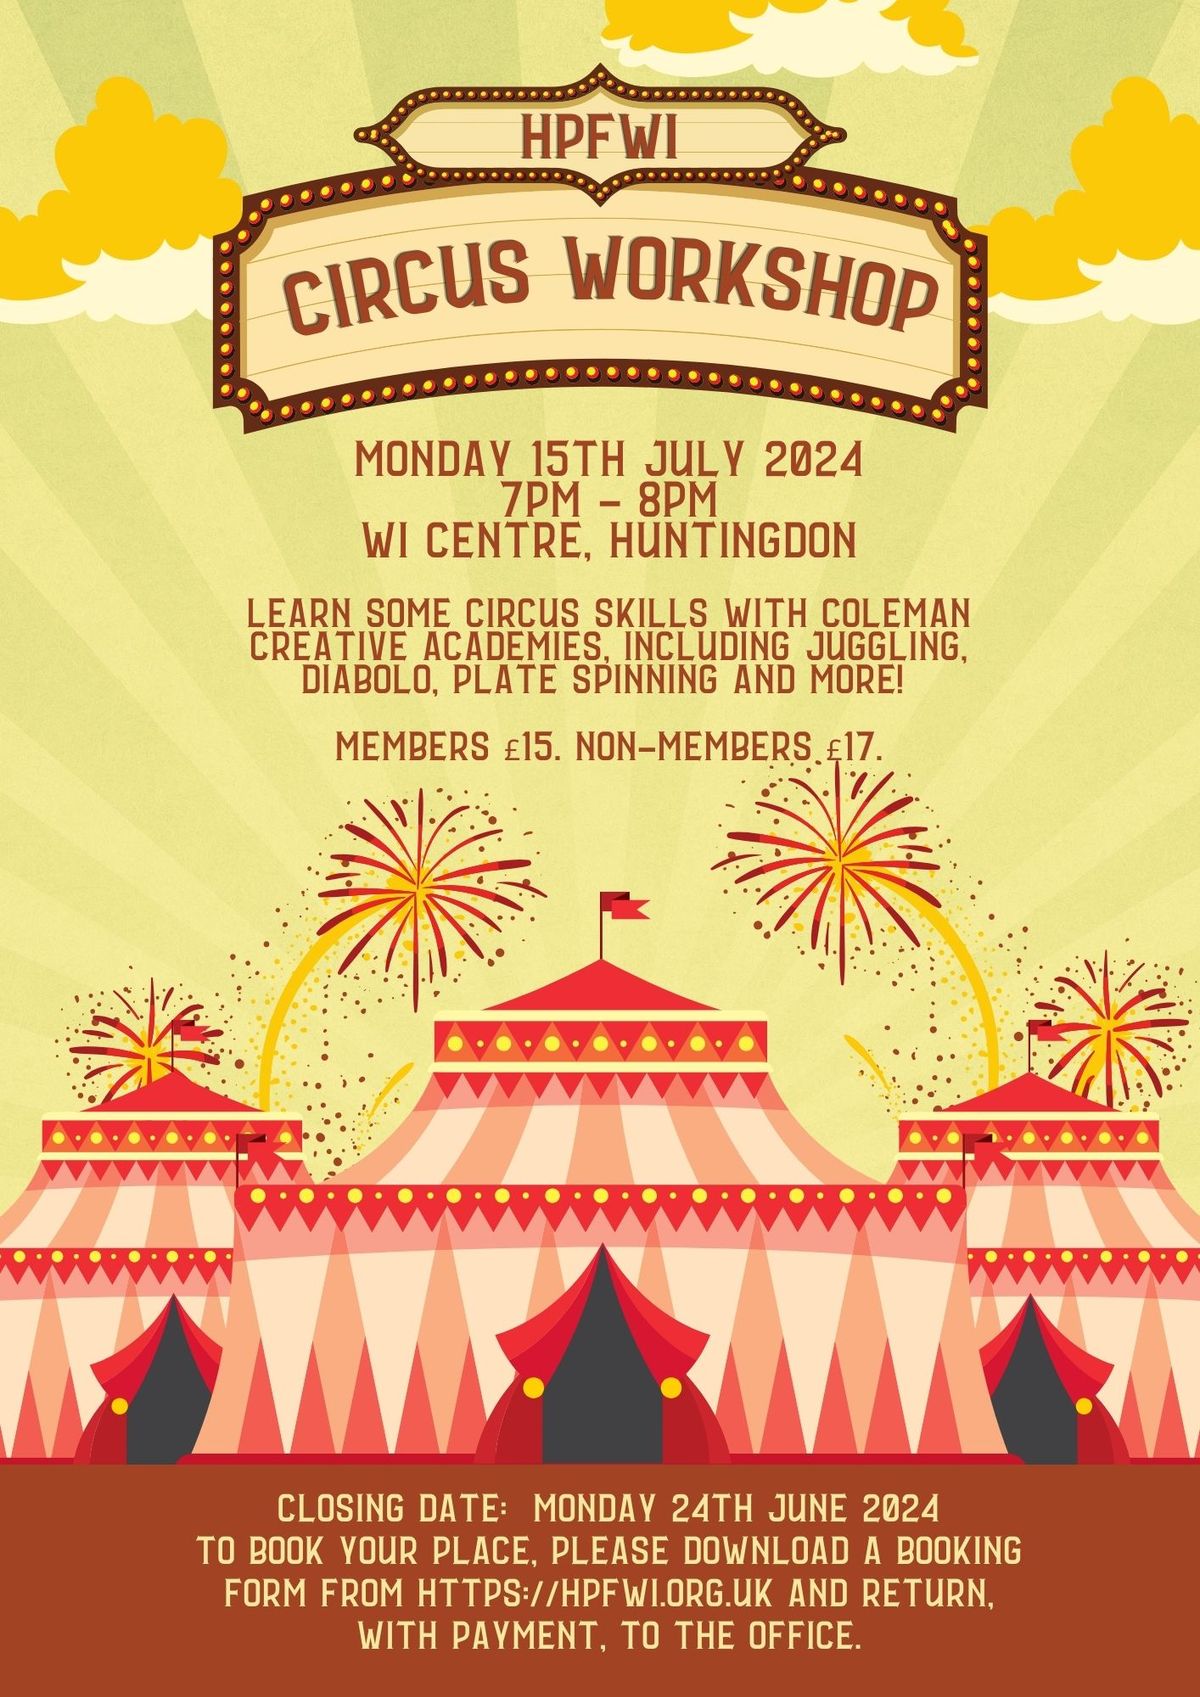 Circus Skills Workshop